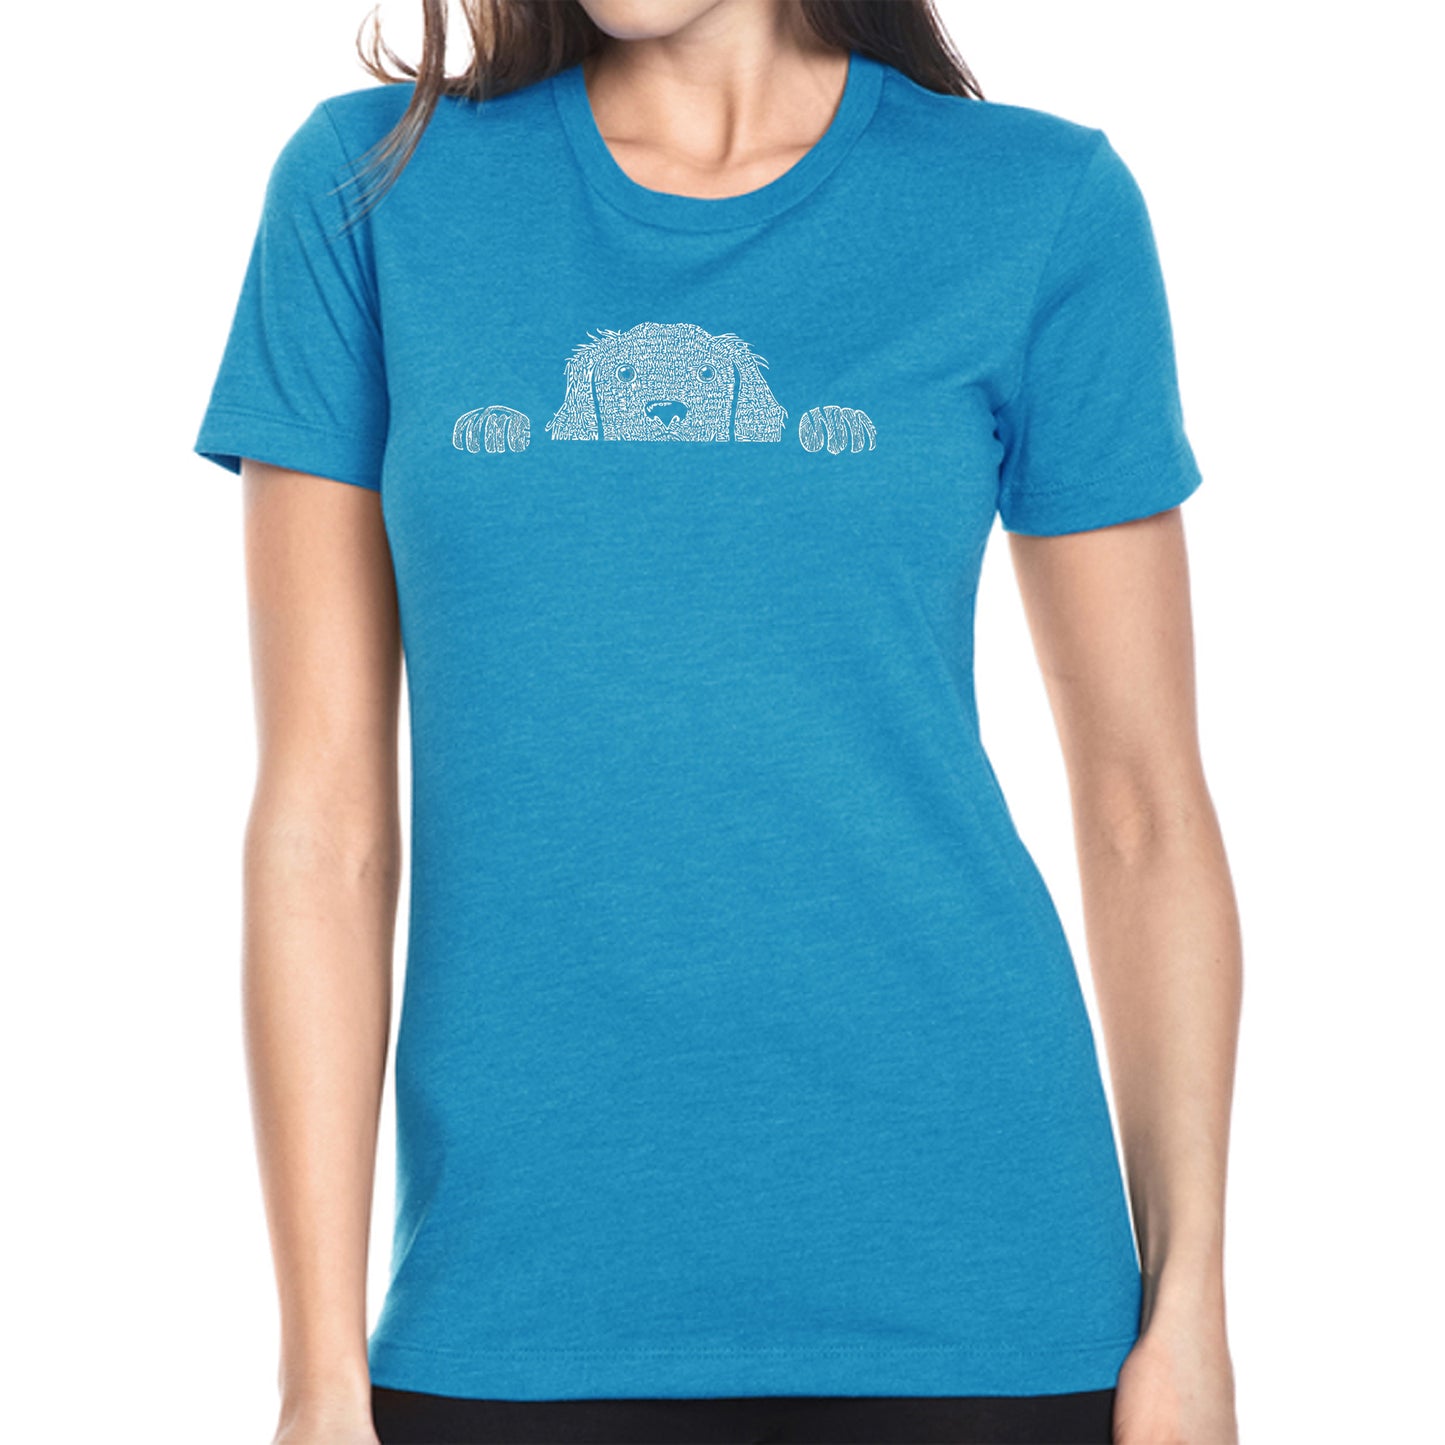 Peeking Dog  - Women's Premium Blend Word Art T-Shirt